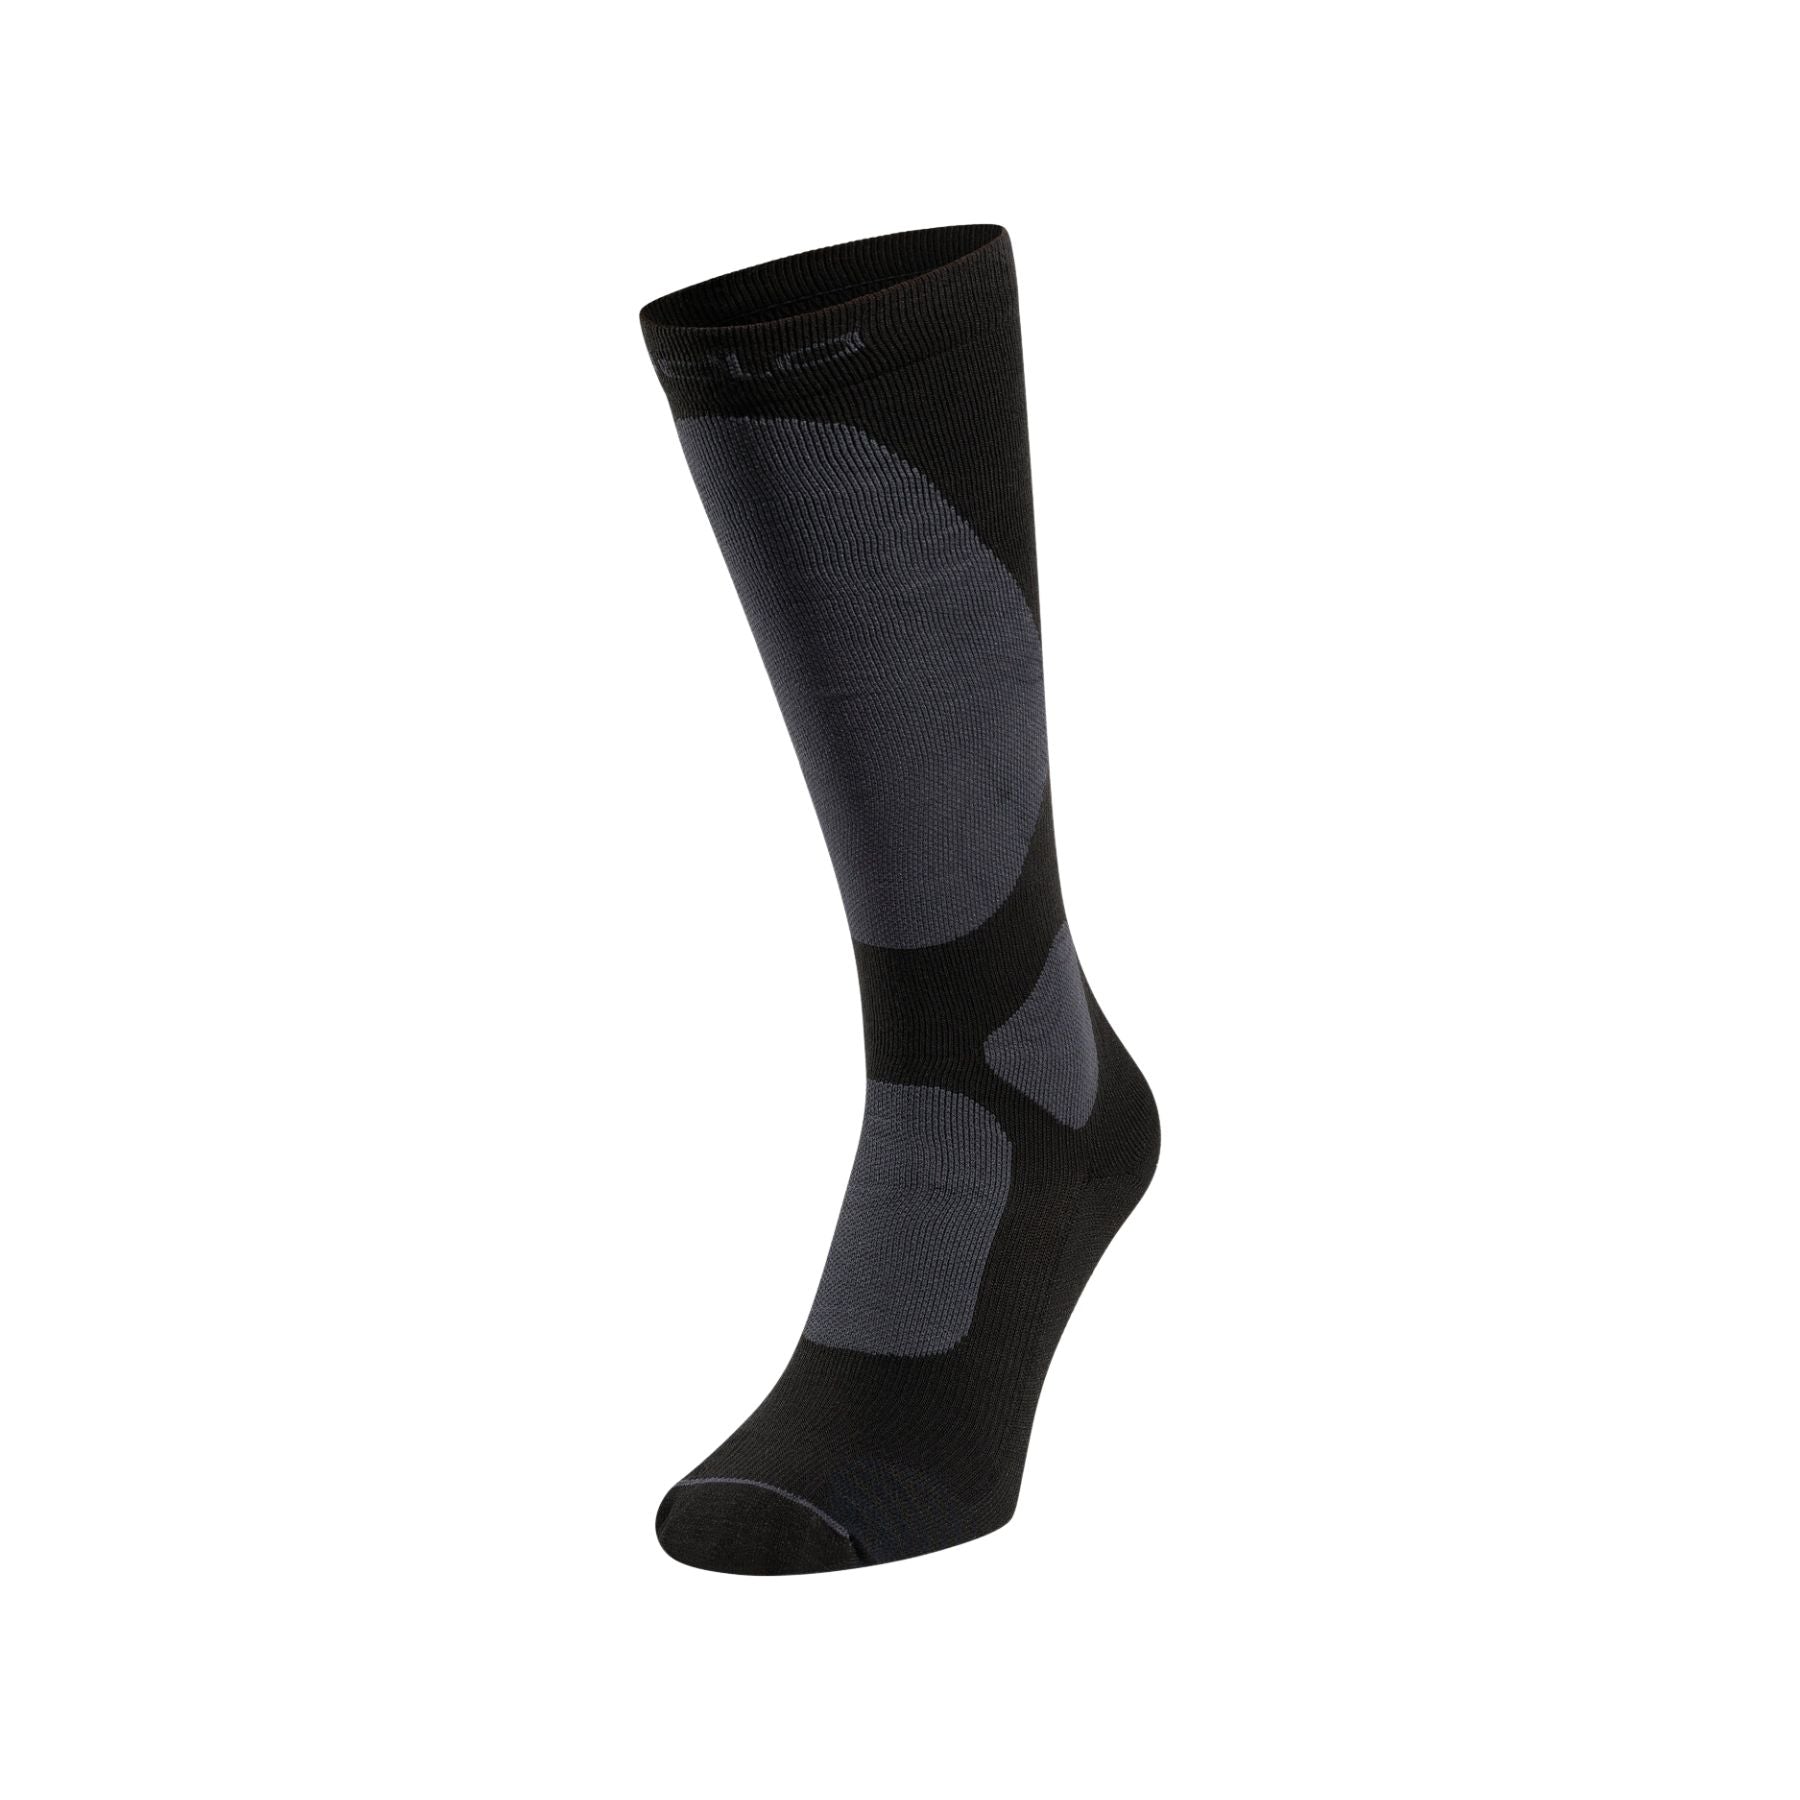 Odlo Active Warm Essentials Ski Sock in Black